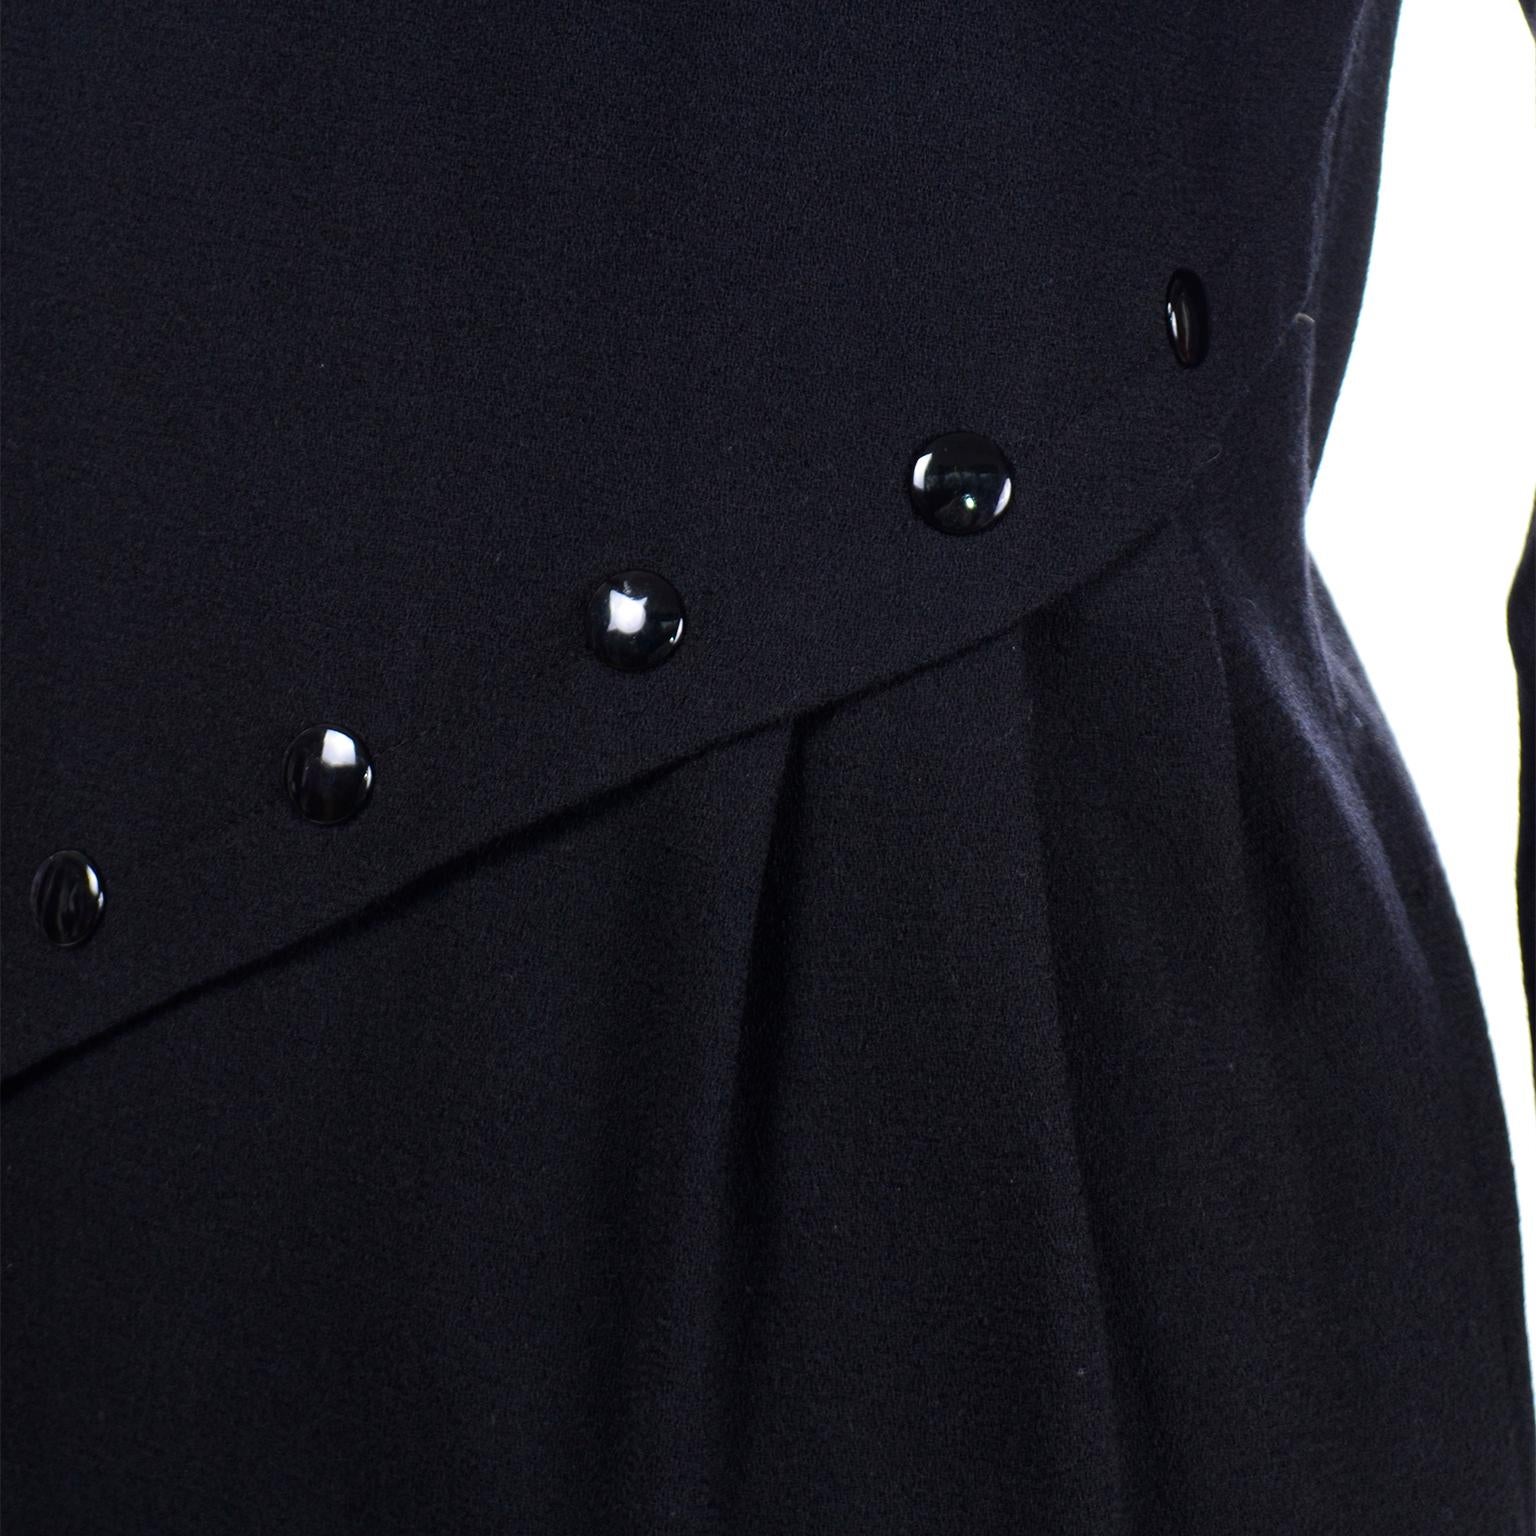 1980s Pierre Cardin Black Vintage Dress W Button Details Lined In Silk For Sale 1